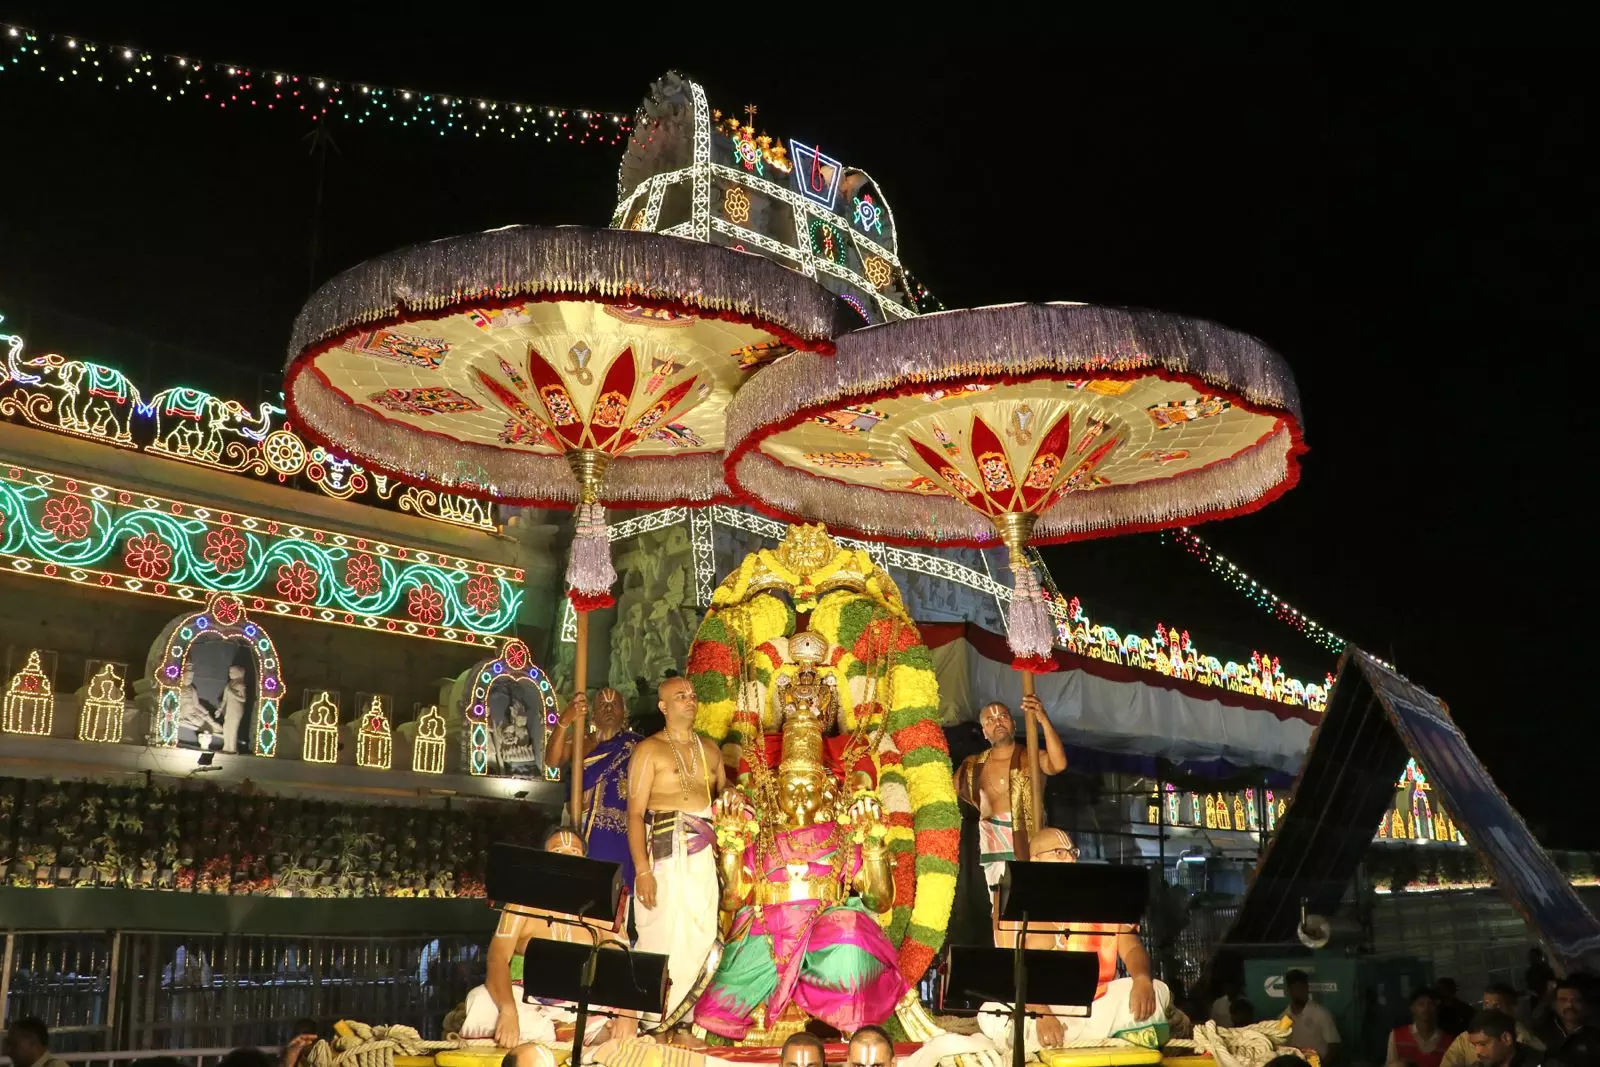 970th Avatarotsavam of Ananthalwar celebrated in Tirumala